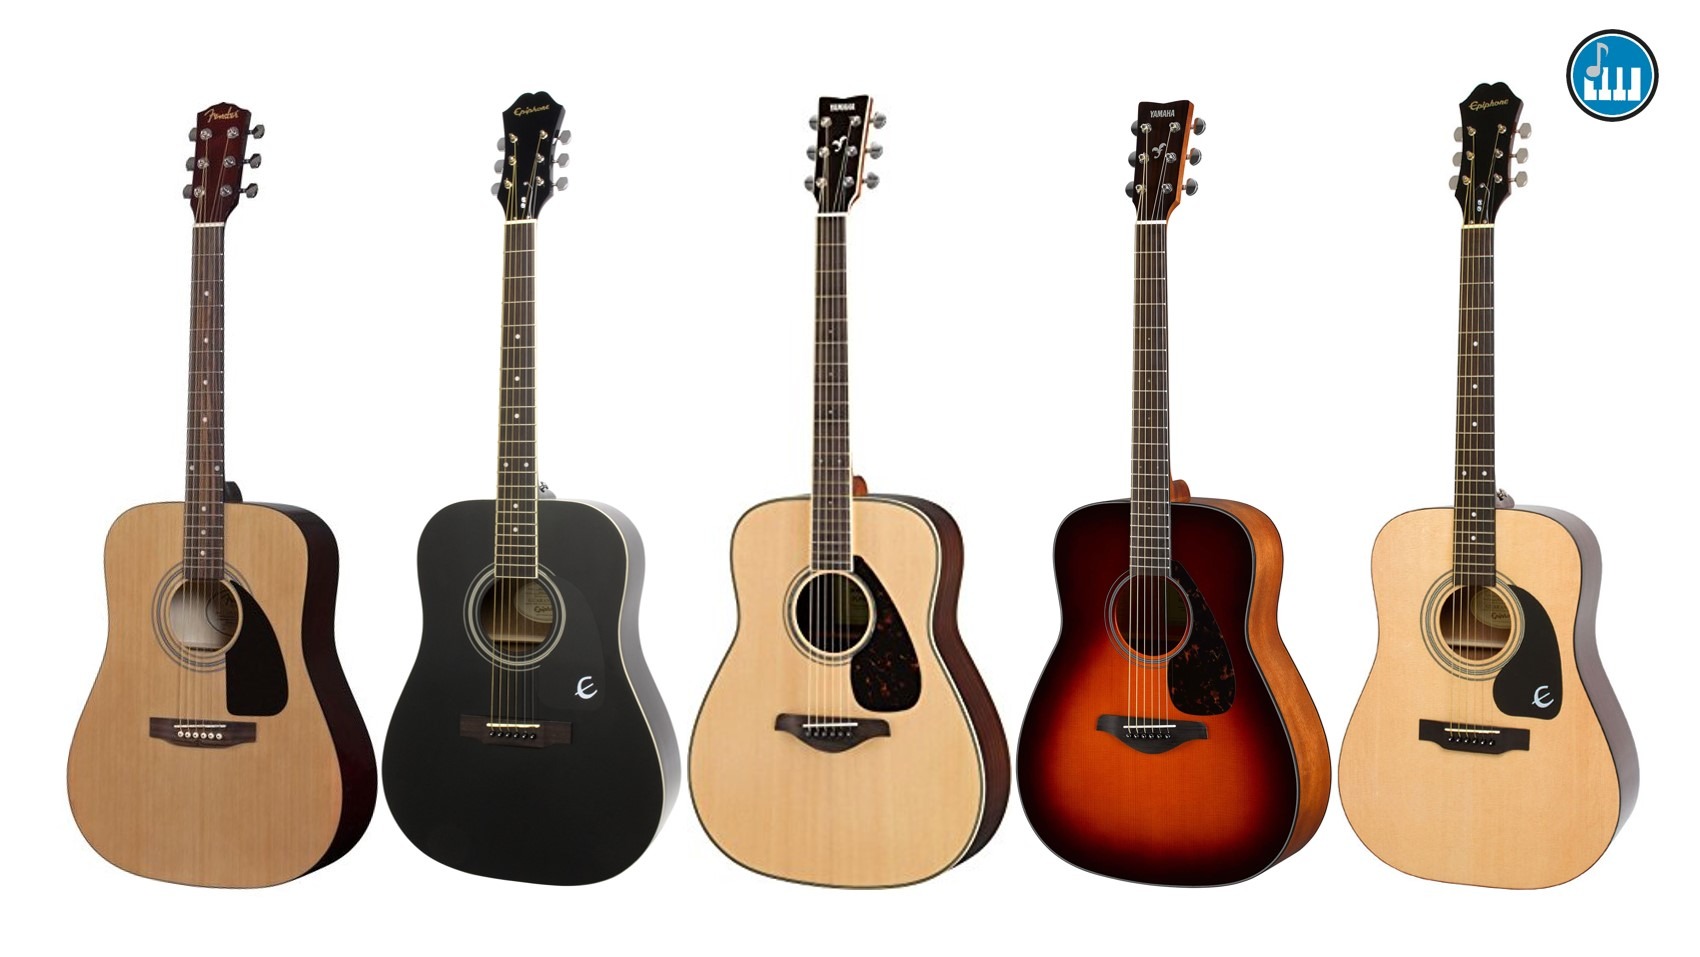 Ejecutable Sencillez proporcionar Mejores Guitarras Acústicas Baratas para Principiantes - GEARanking